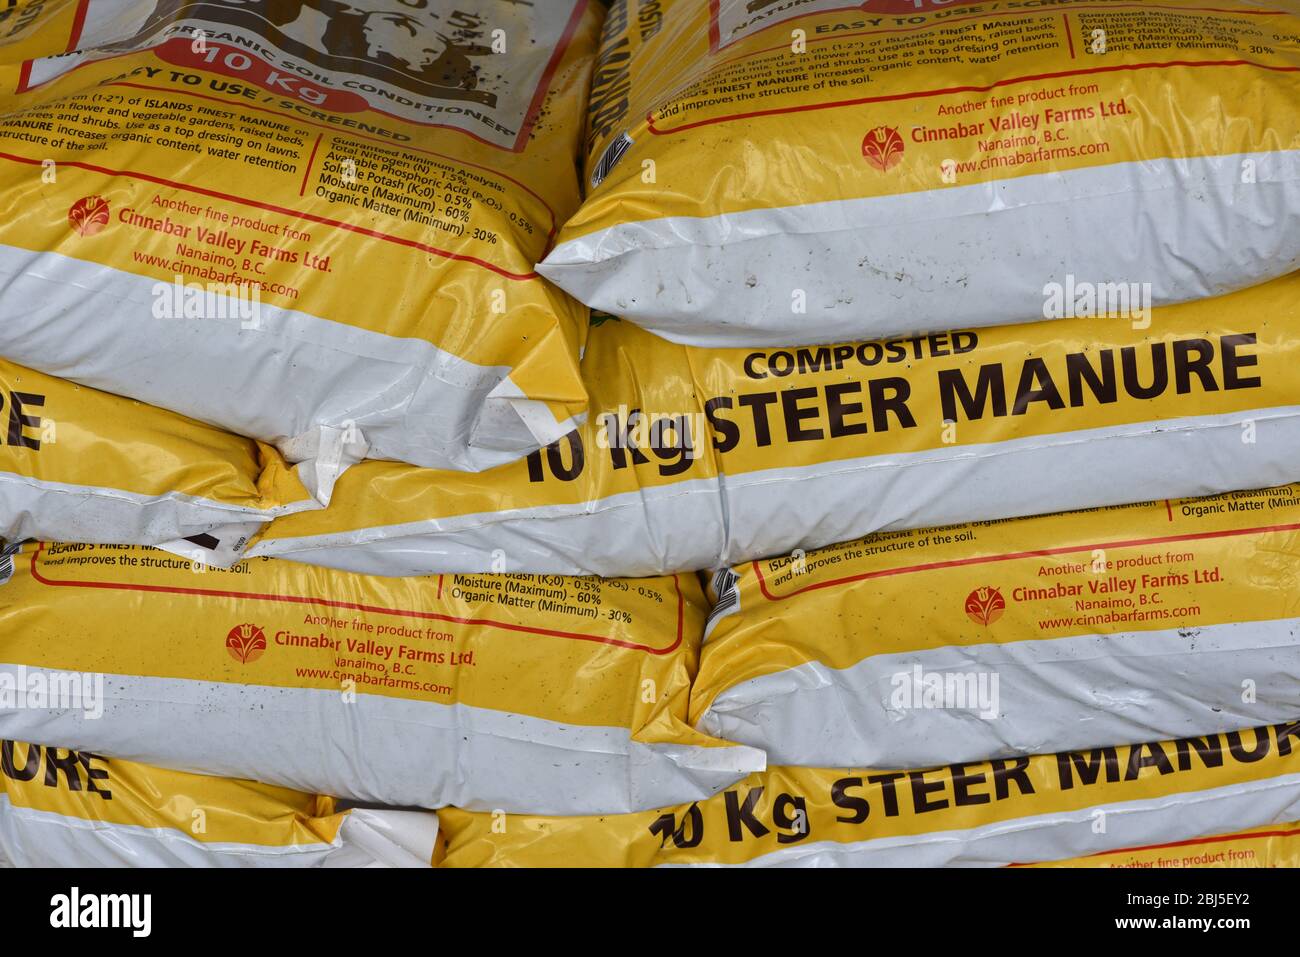 Ten kilo bags of steer manure for sale for fertilizing gardens Stock Photo